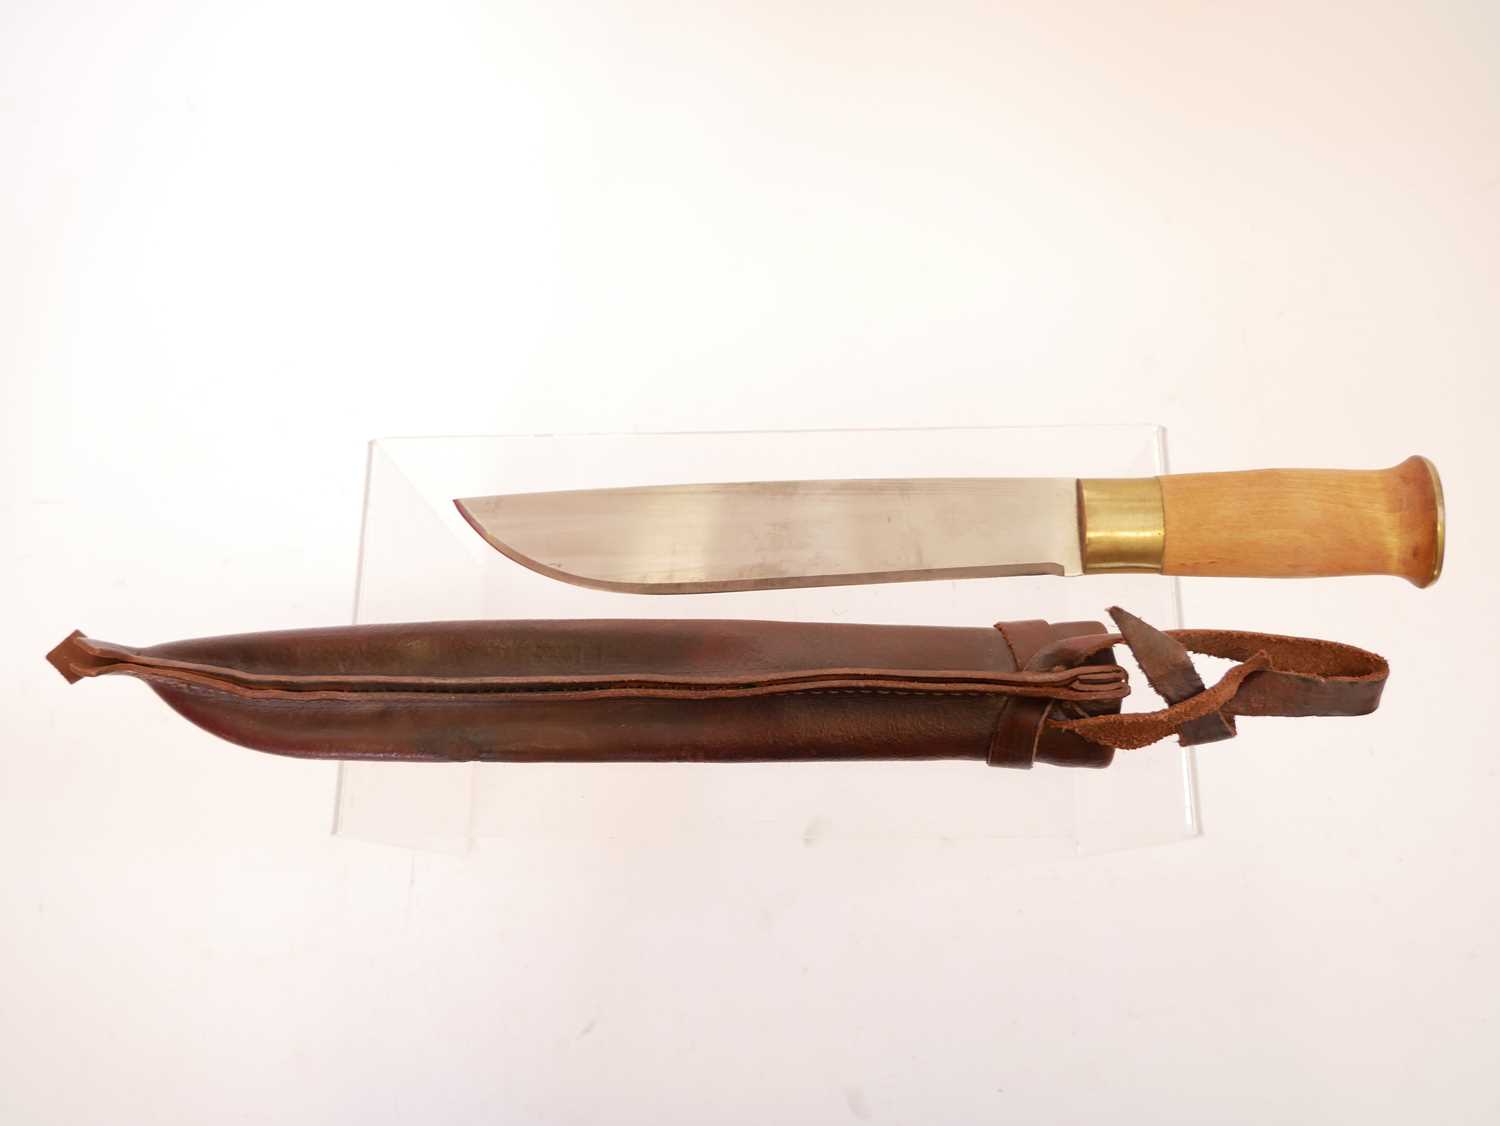 Knivsmed hunting knife, 9inch blade marked 'Knivsmed Stromeng Karasjok, Norway' with leather - Image 4 of 7